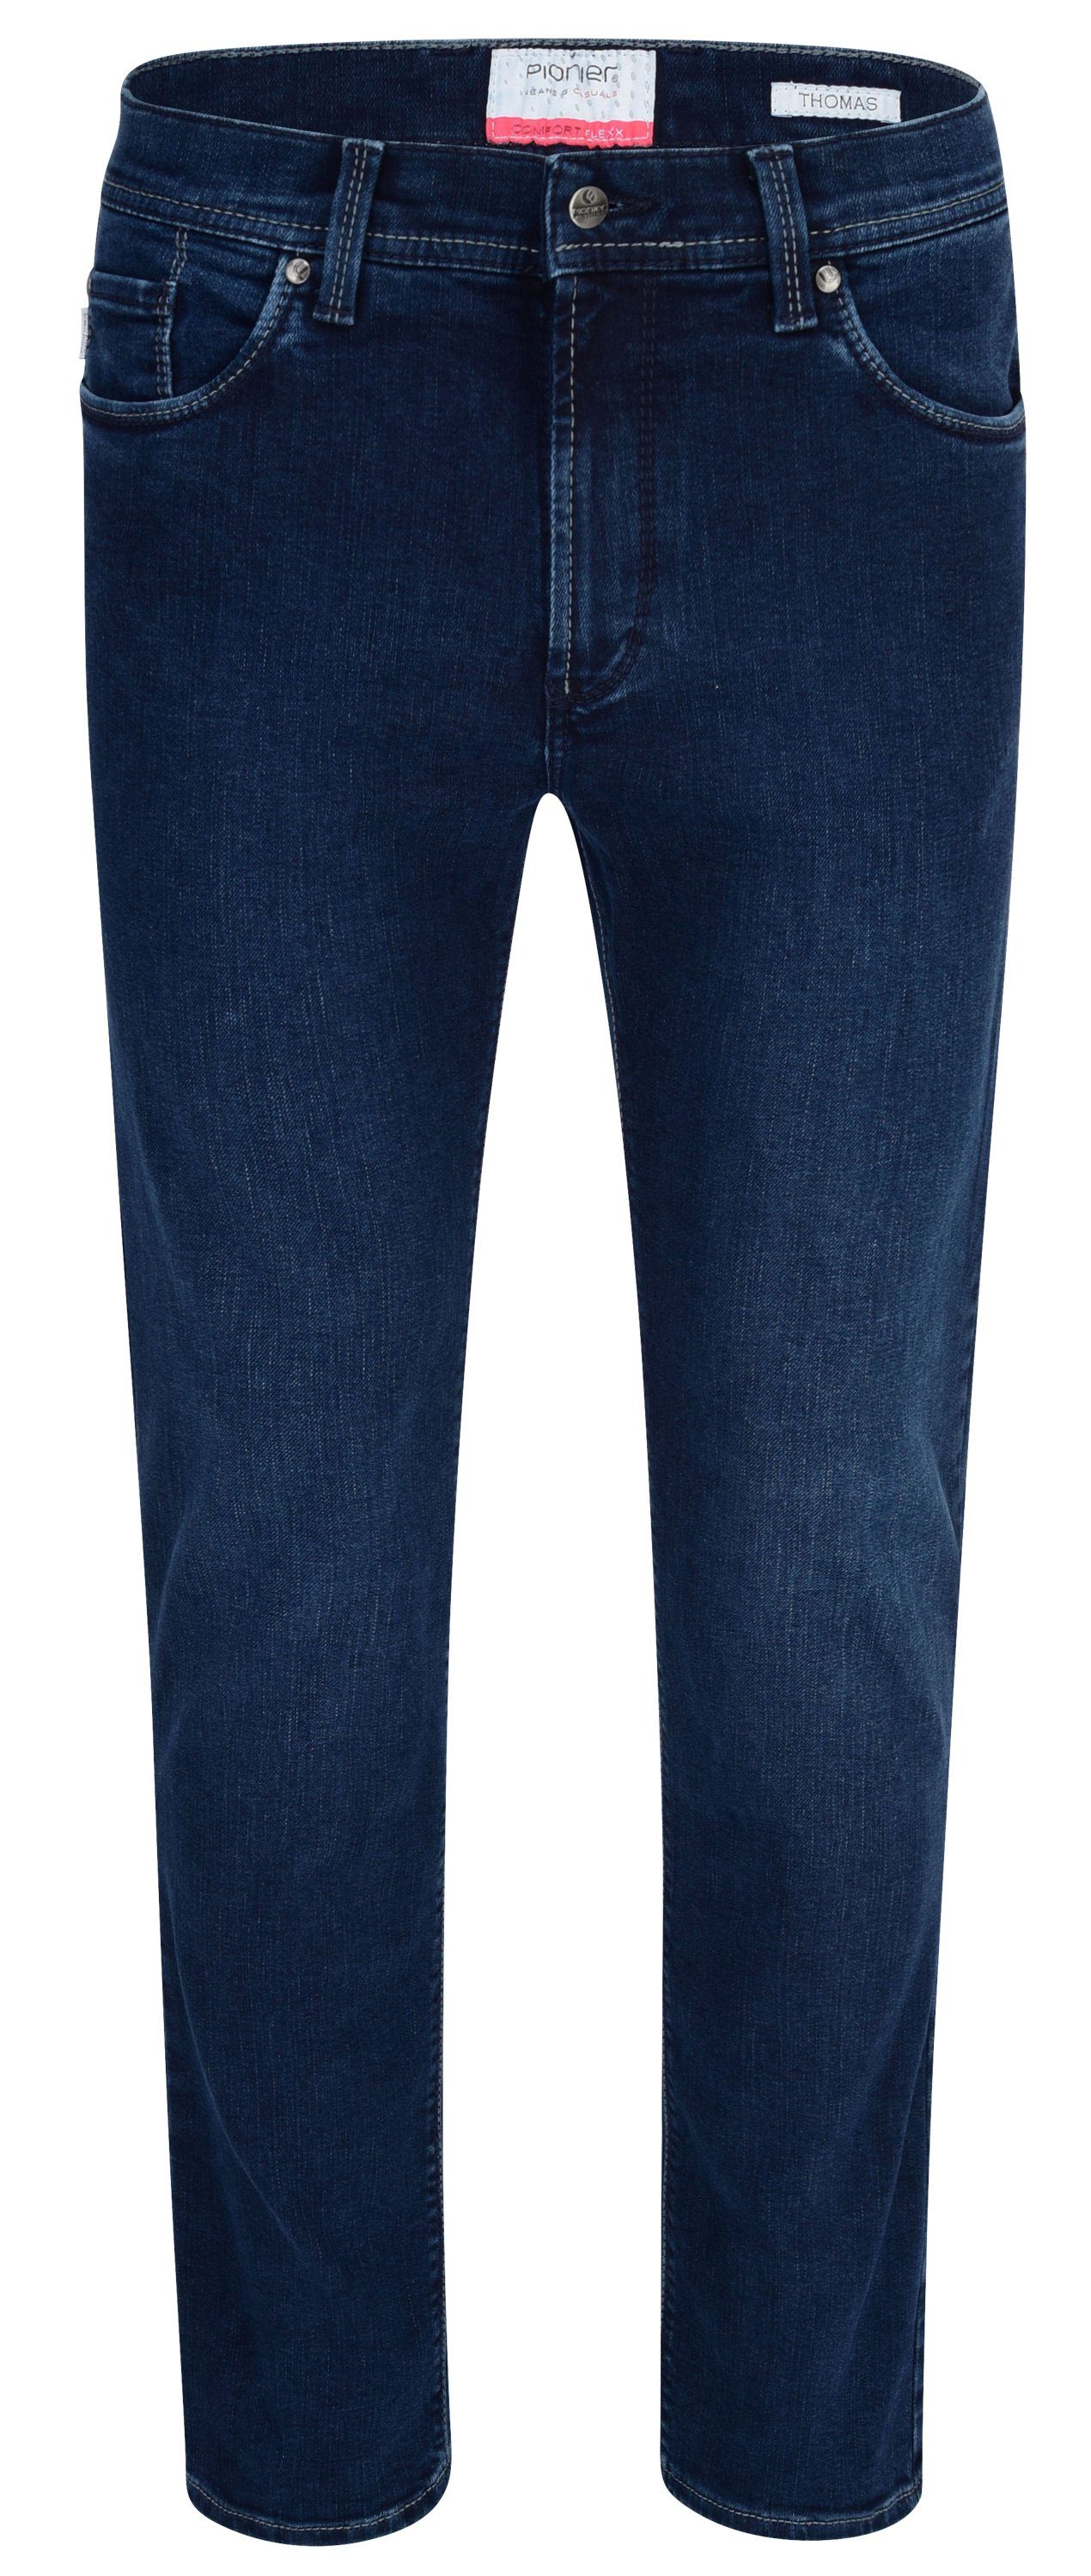 Pionier 5-Pocket-Jeans PIONIER THOMAS midnight blue 2079 6192.165